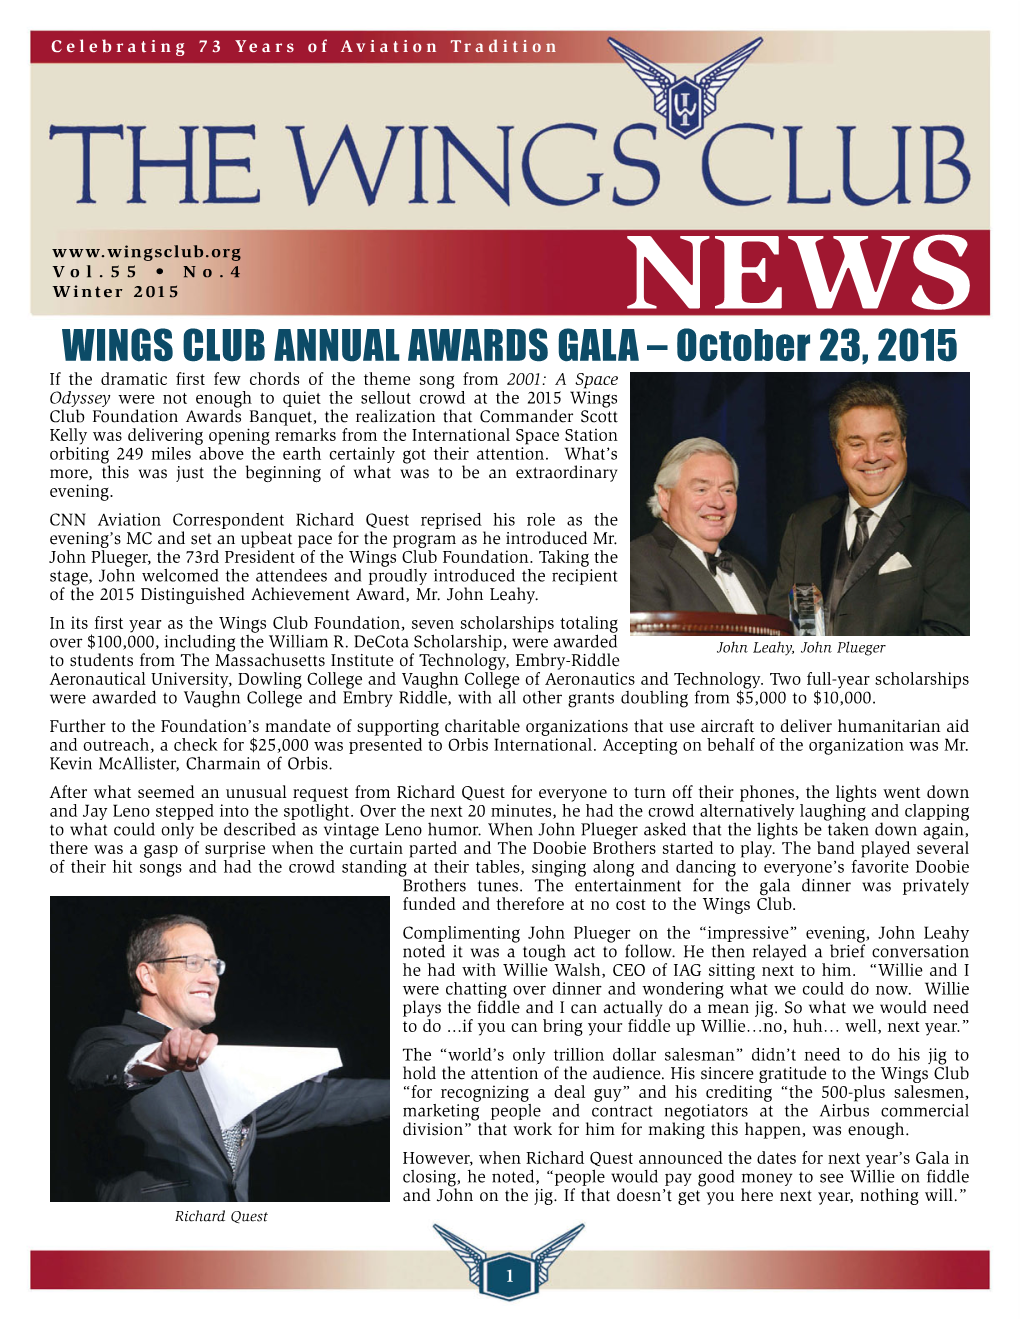 WINGS CLUB ANNUAL AWARDS GALA – October 23, 2015